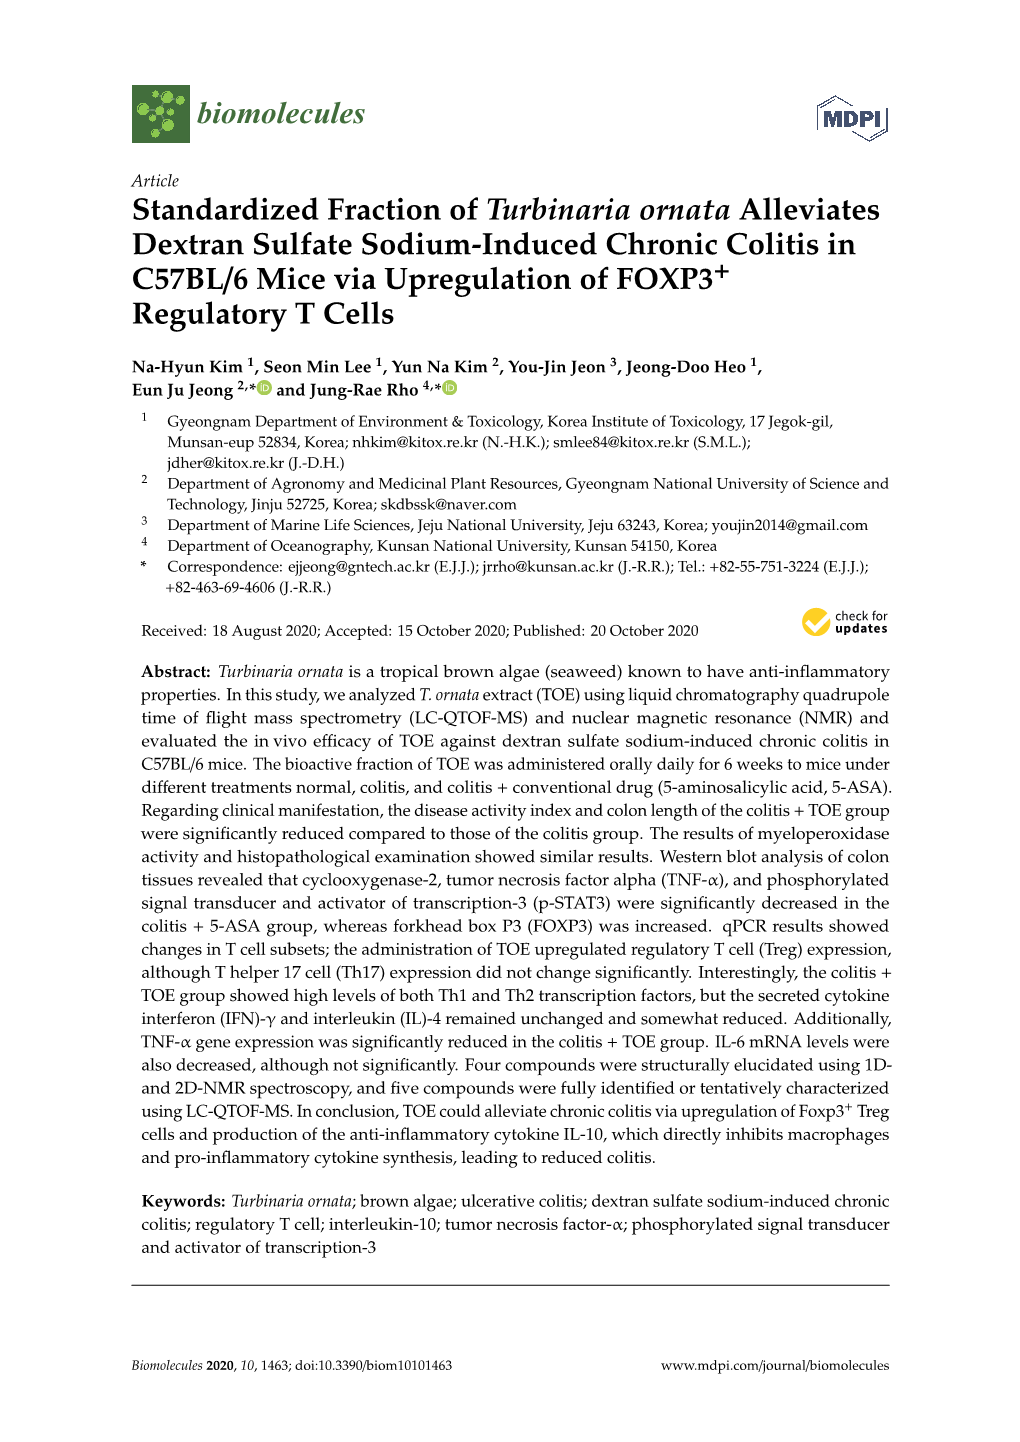 Standardized Fraction of Turbinaria Ornata Alleviates Dextran Sulfate Sodium-Induced Chronic Colitis in C57BL/6 Mice Via Upregulation of FOXP3+ Regulatory T Cells